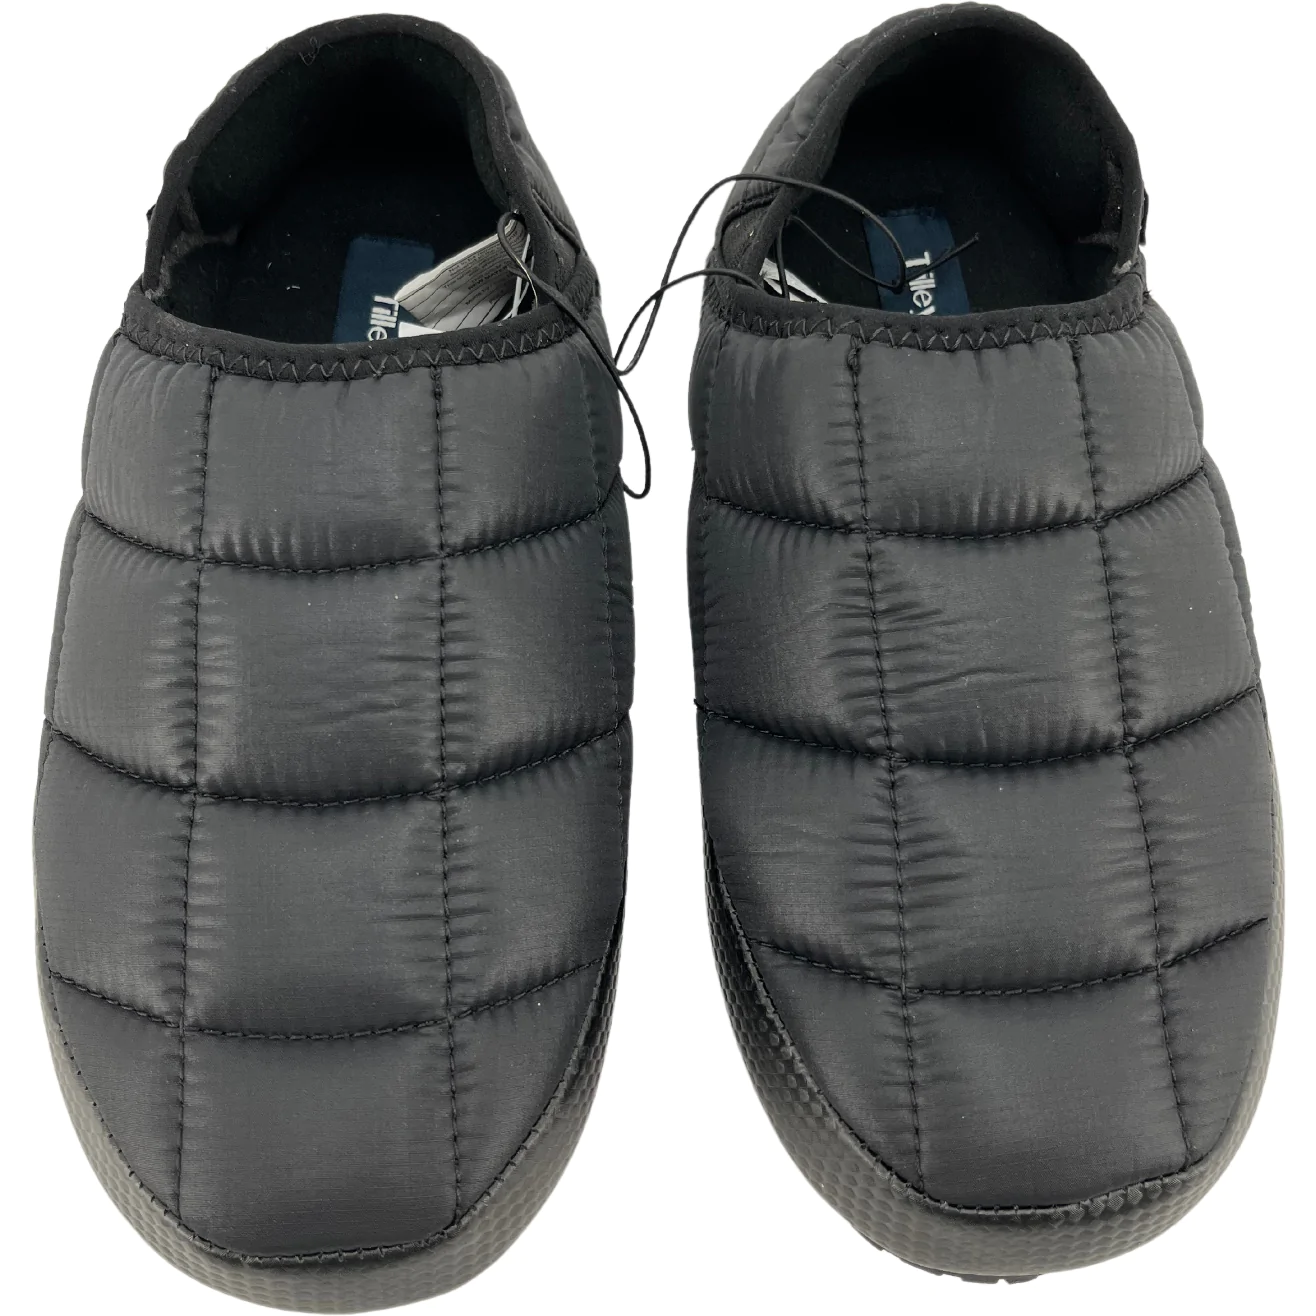 Tilley Adult Puffer Slippers / Black / Non Slip / Various Sizes